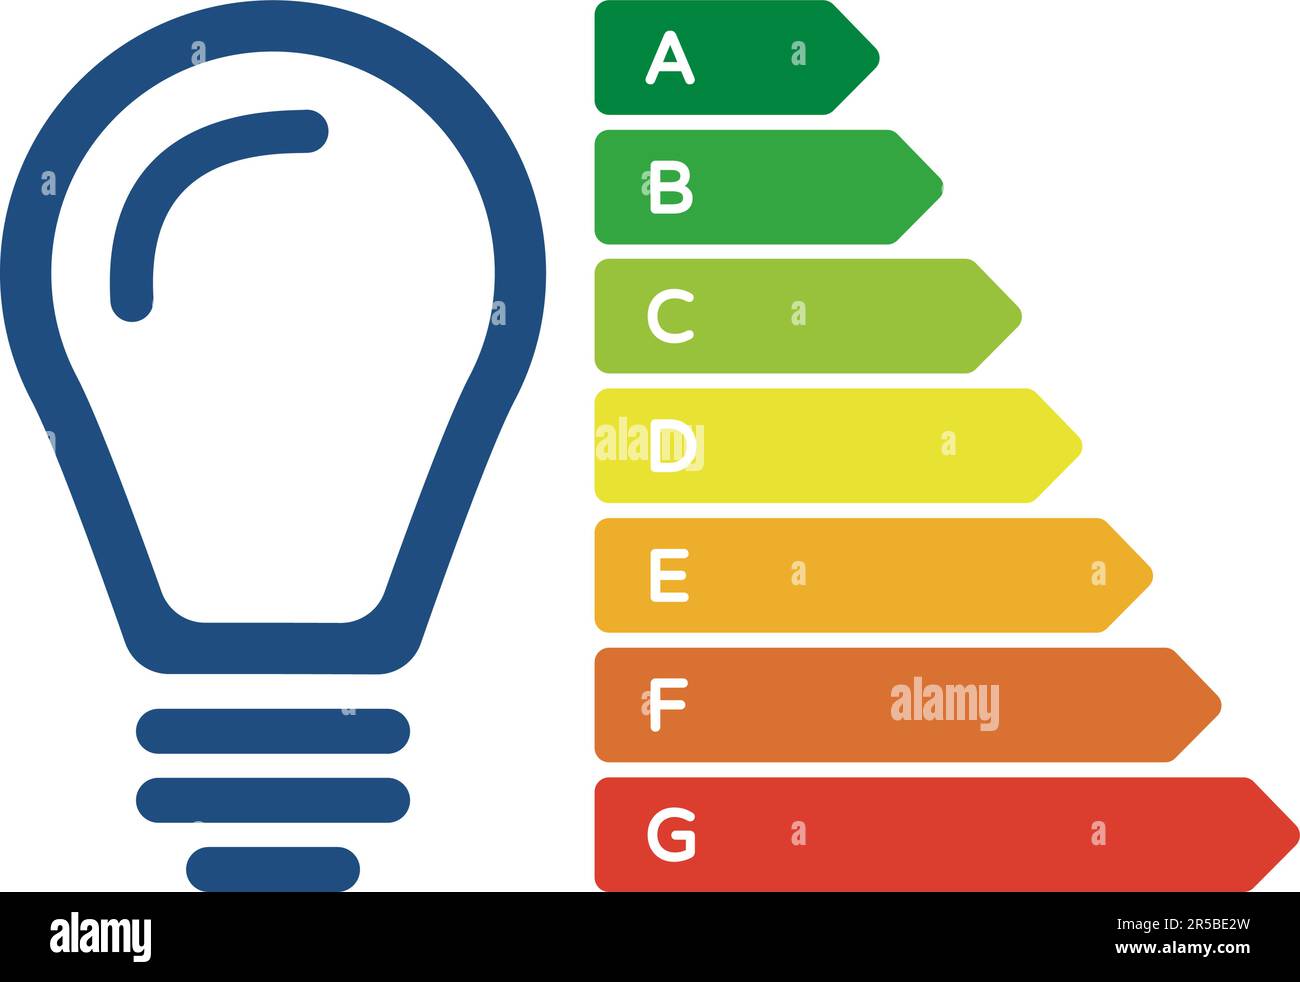 Light bulb with energy efficiency classes. European Union energy label Stock Vector